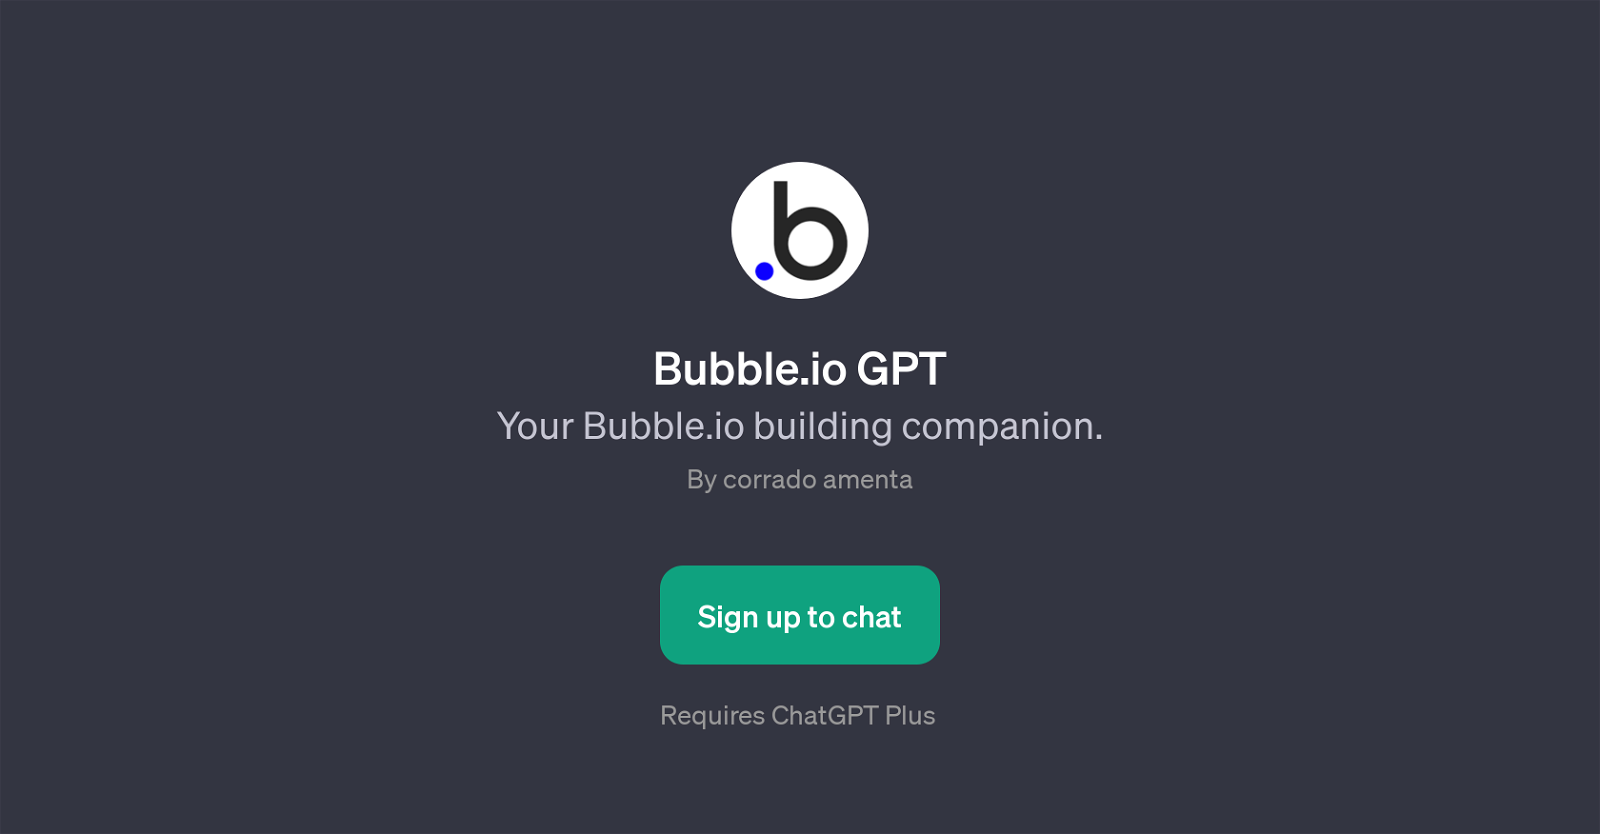 Bubble.io GPT website